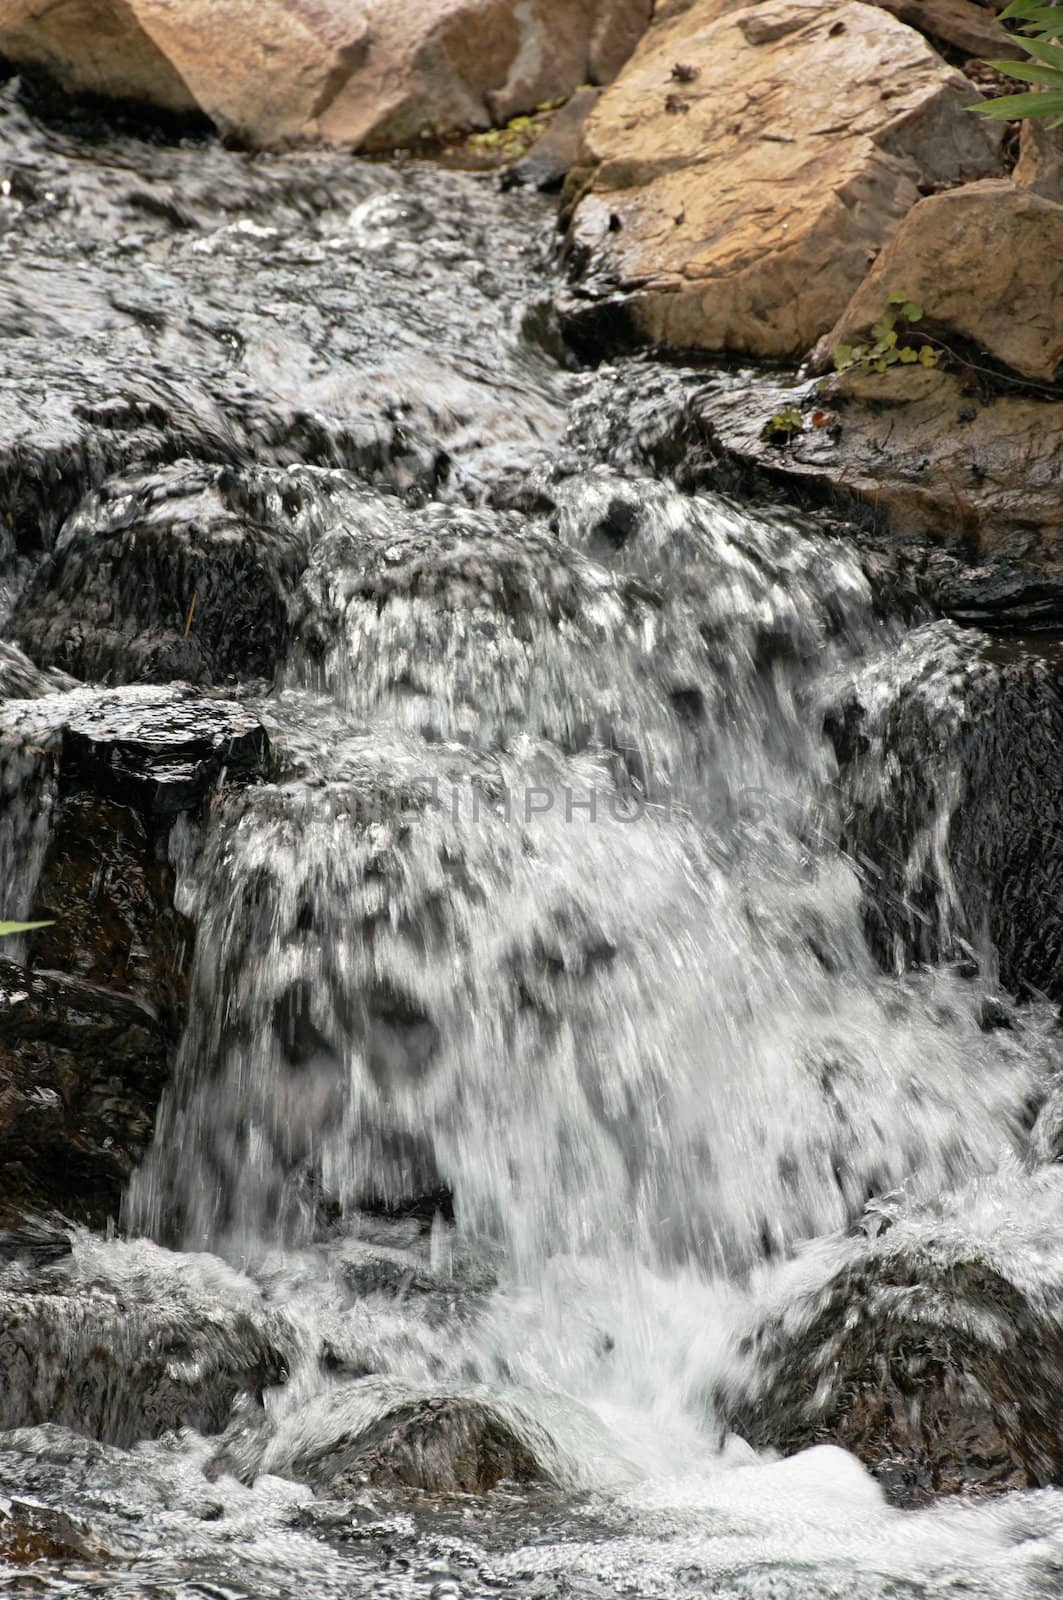 Small waterfall in rocky stream.